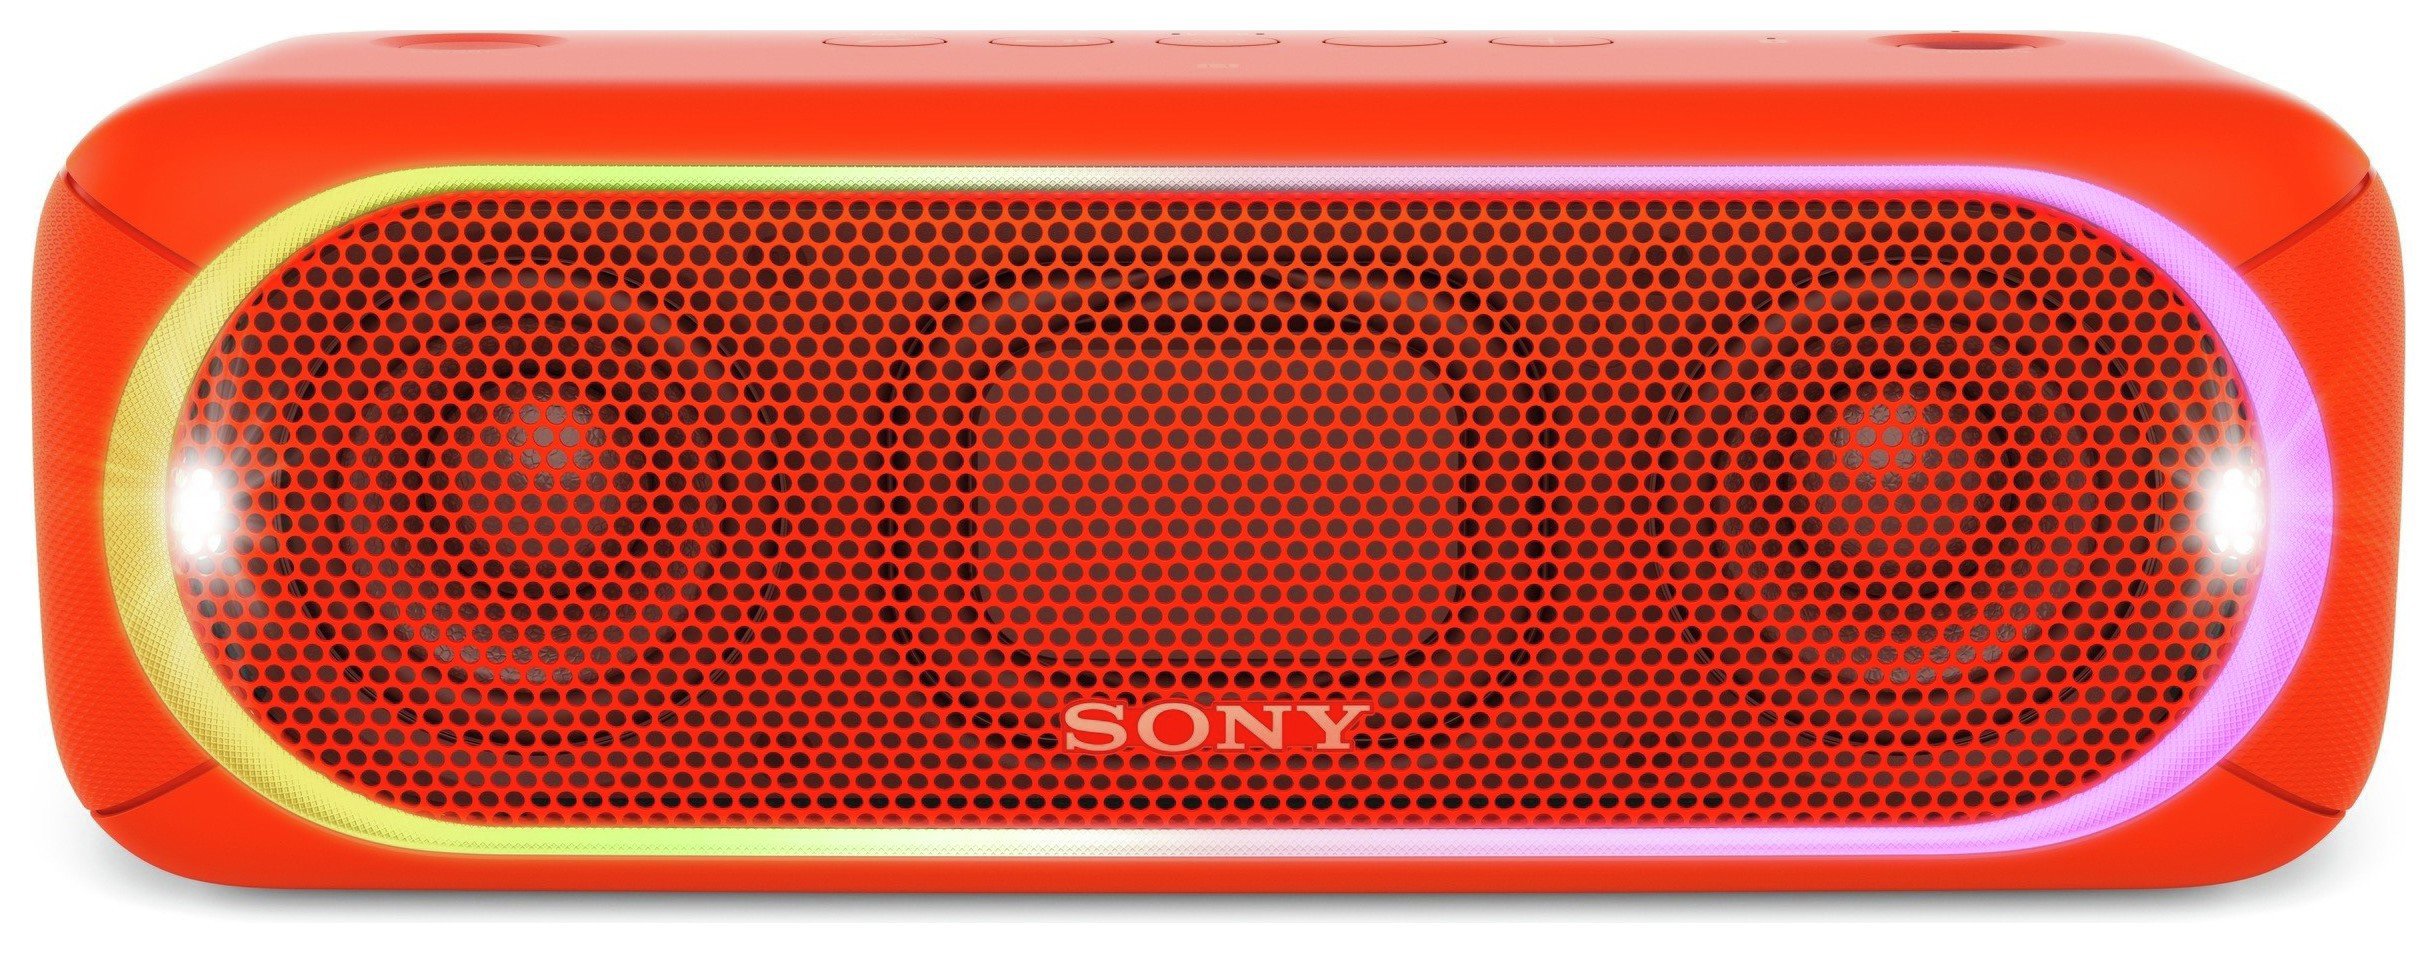 Sony SRSXB30R Portable Wireless Speaker - Red